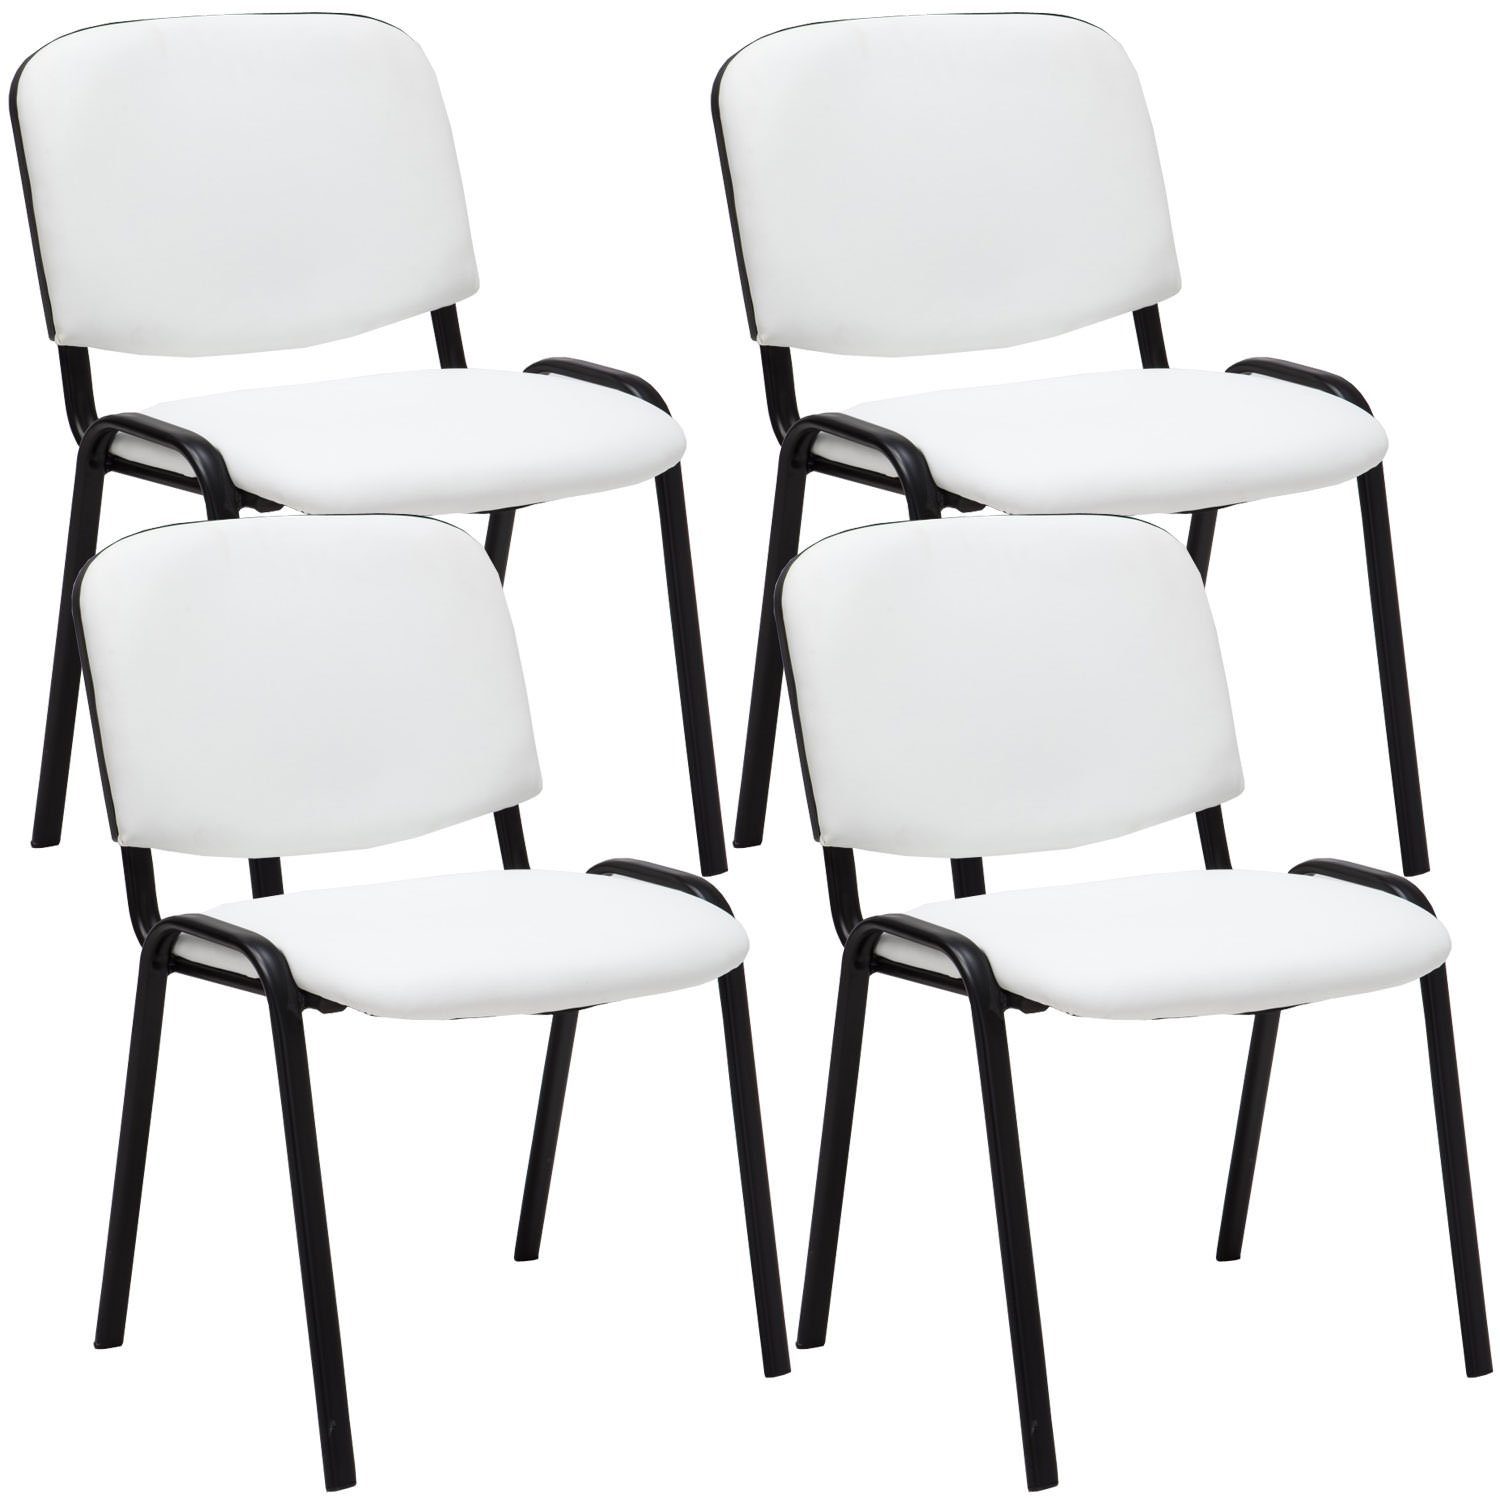 TPFLiving Besucherstuhl Keen mit hochwertiger Polsterung - Konferenzstuhl (Besprechungsstuhl - Warteraumstuhl - Messestuhl, 4 St), Gestell: Metall matt schwarz - Sitzfläche: Kunstleder weiß